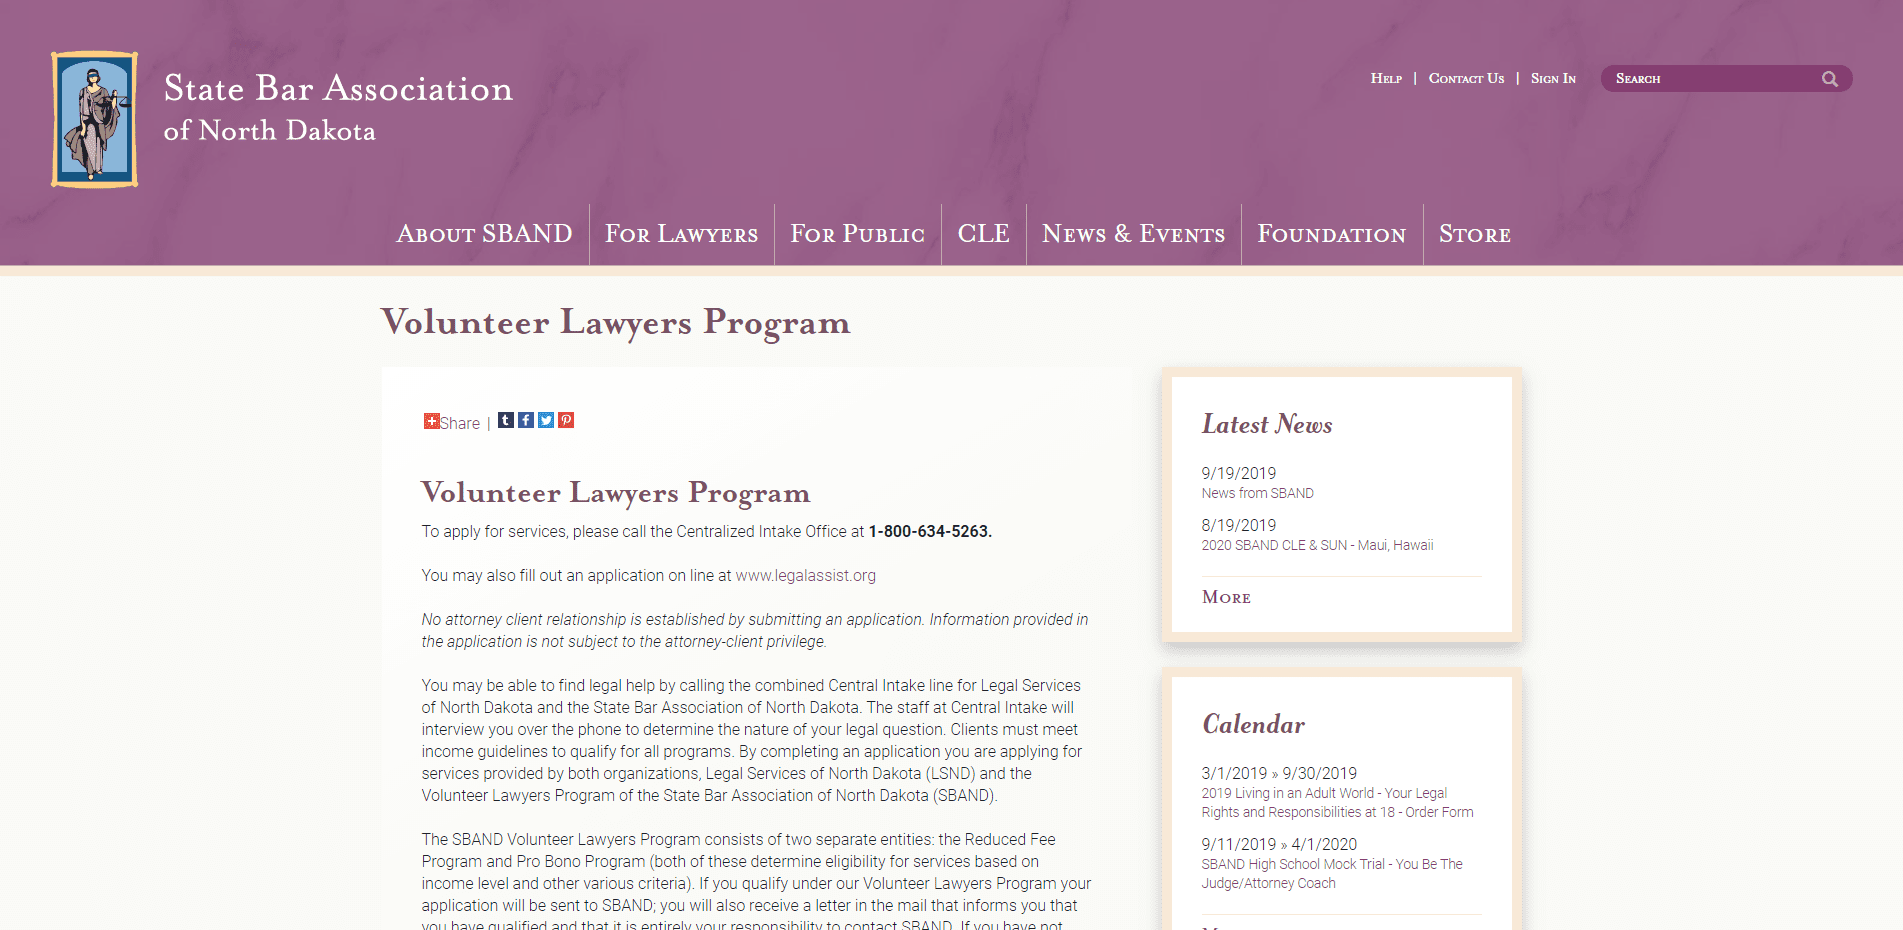 Volunteer Lawyers Program - State Bar Association of North Dakota